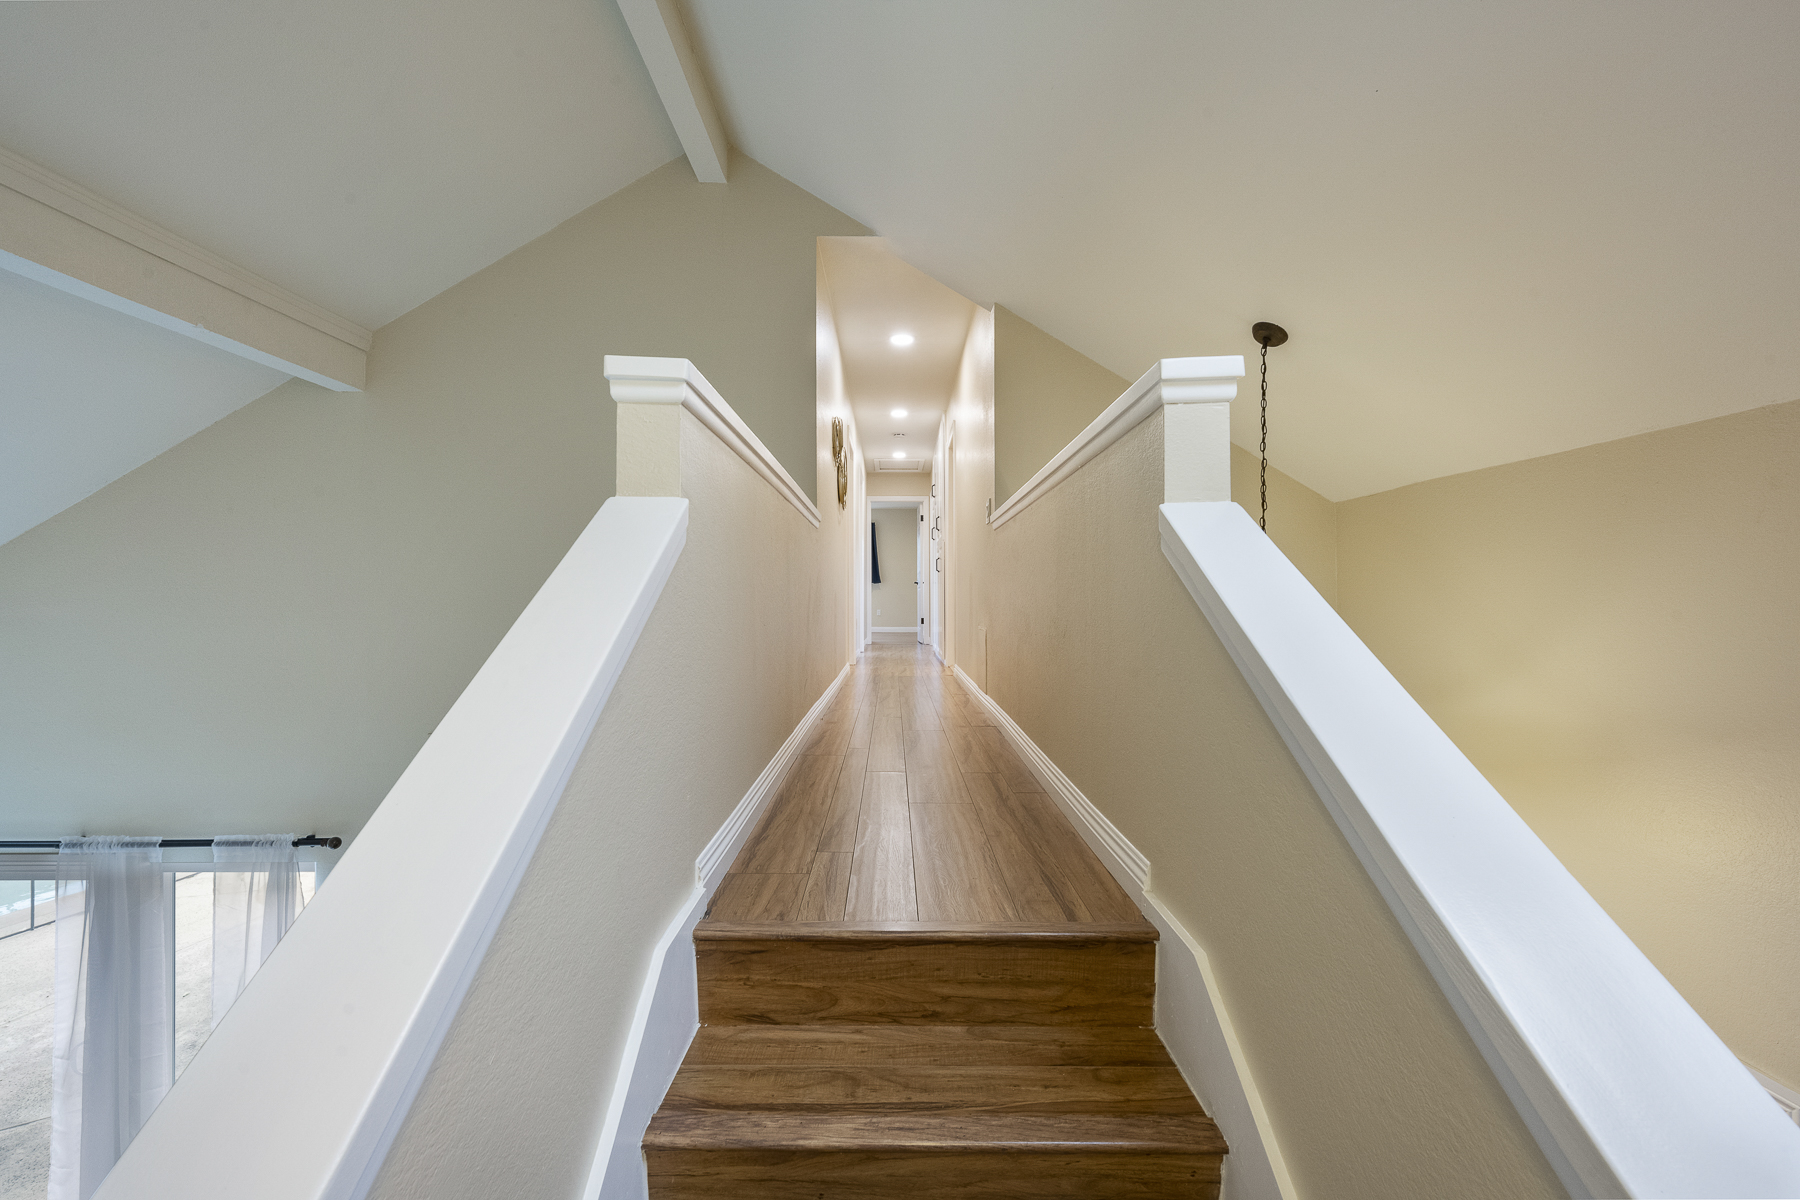 Long hallway with hardwood floors ending in stairs